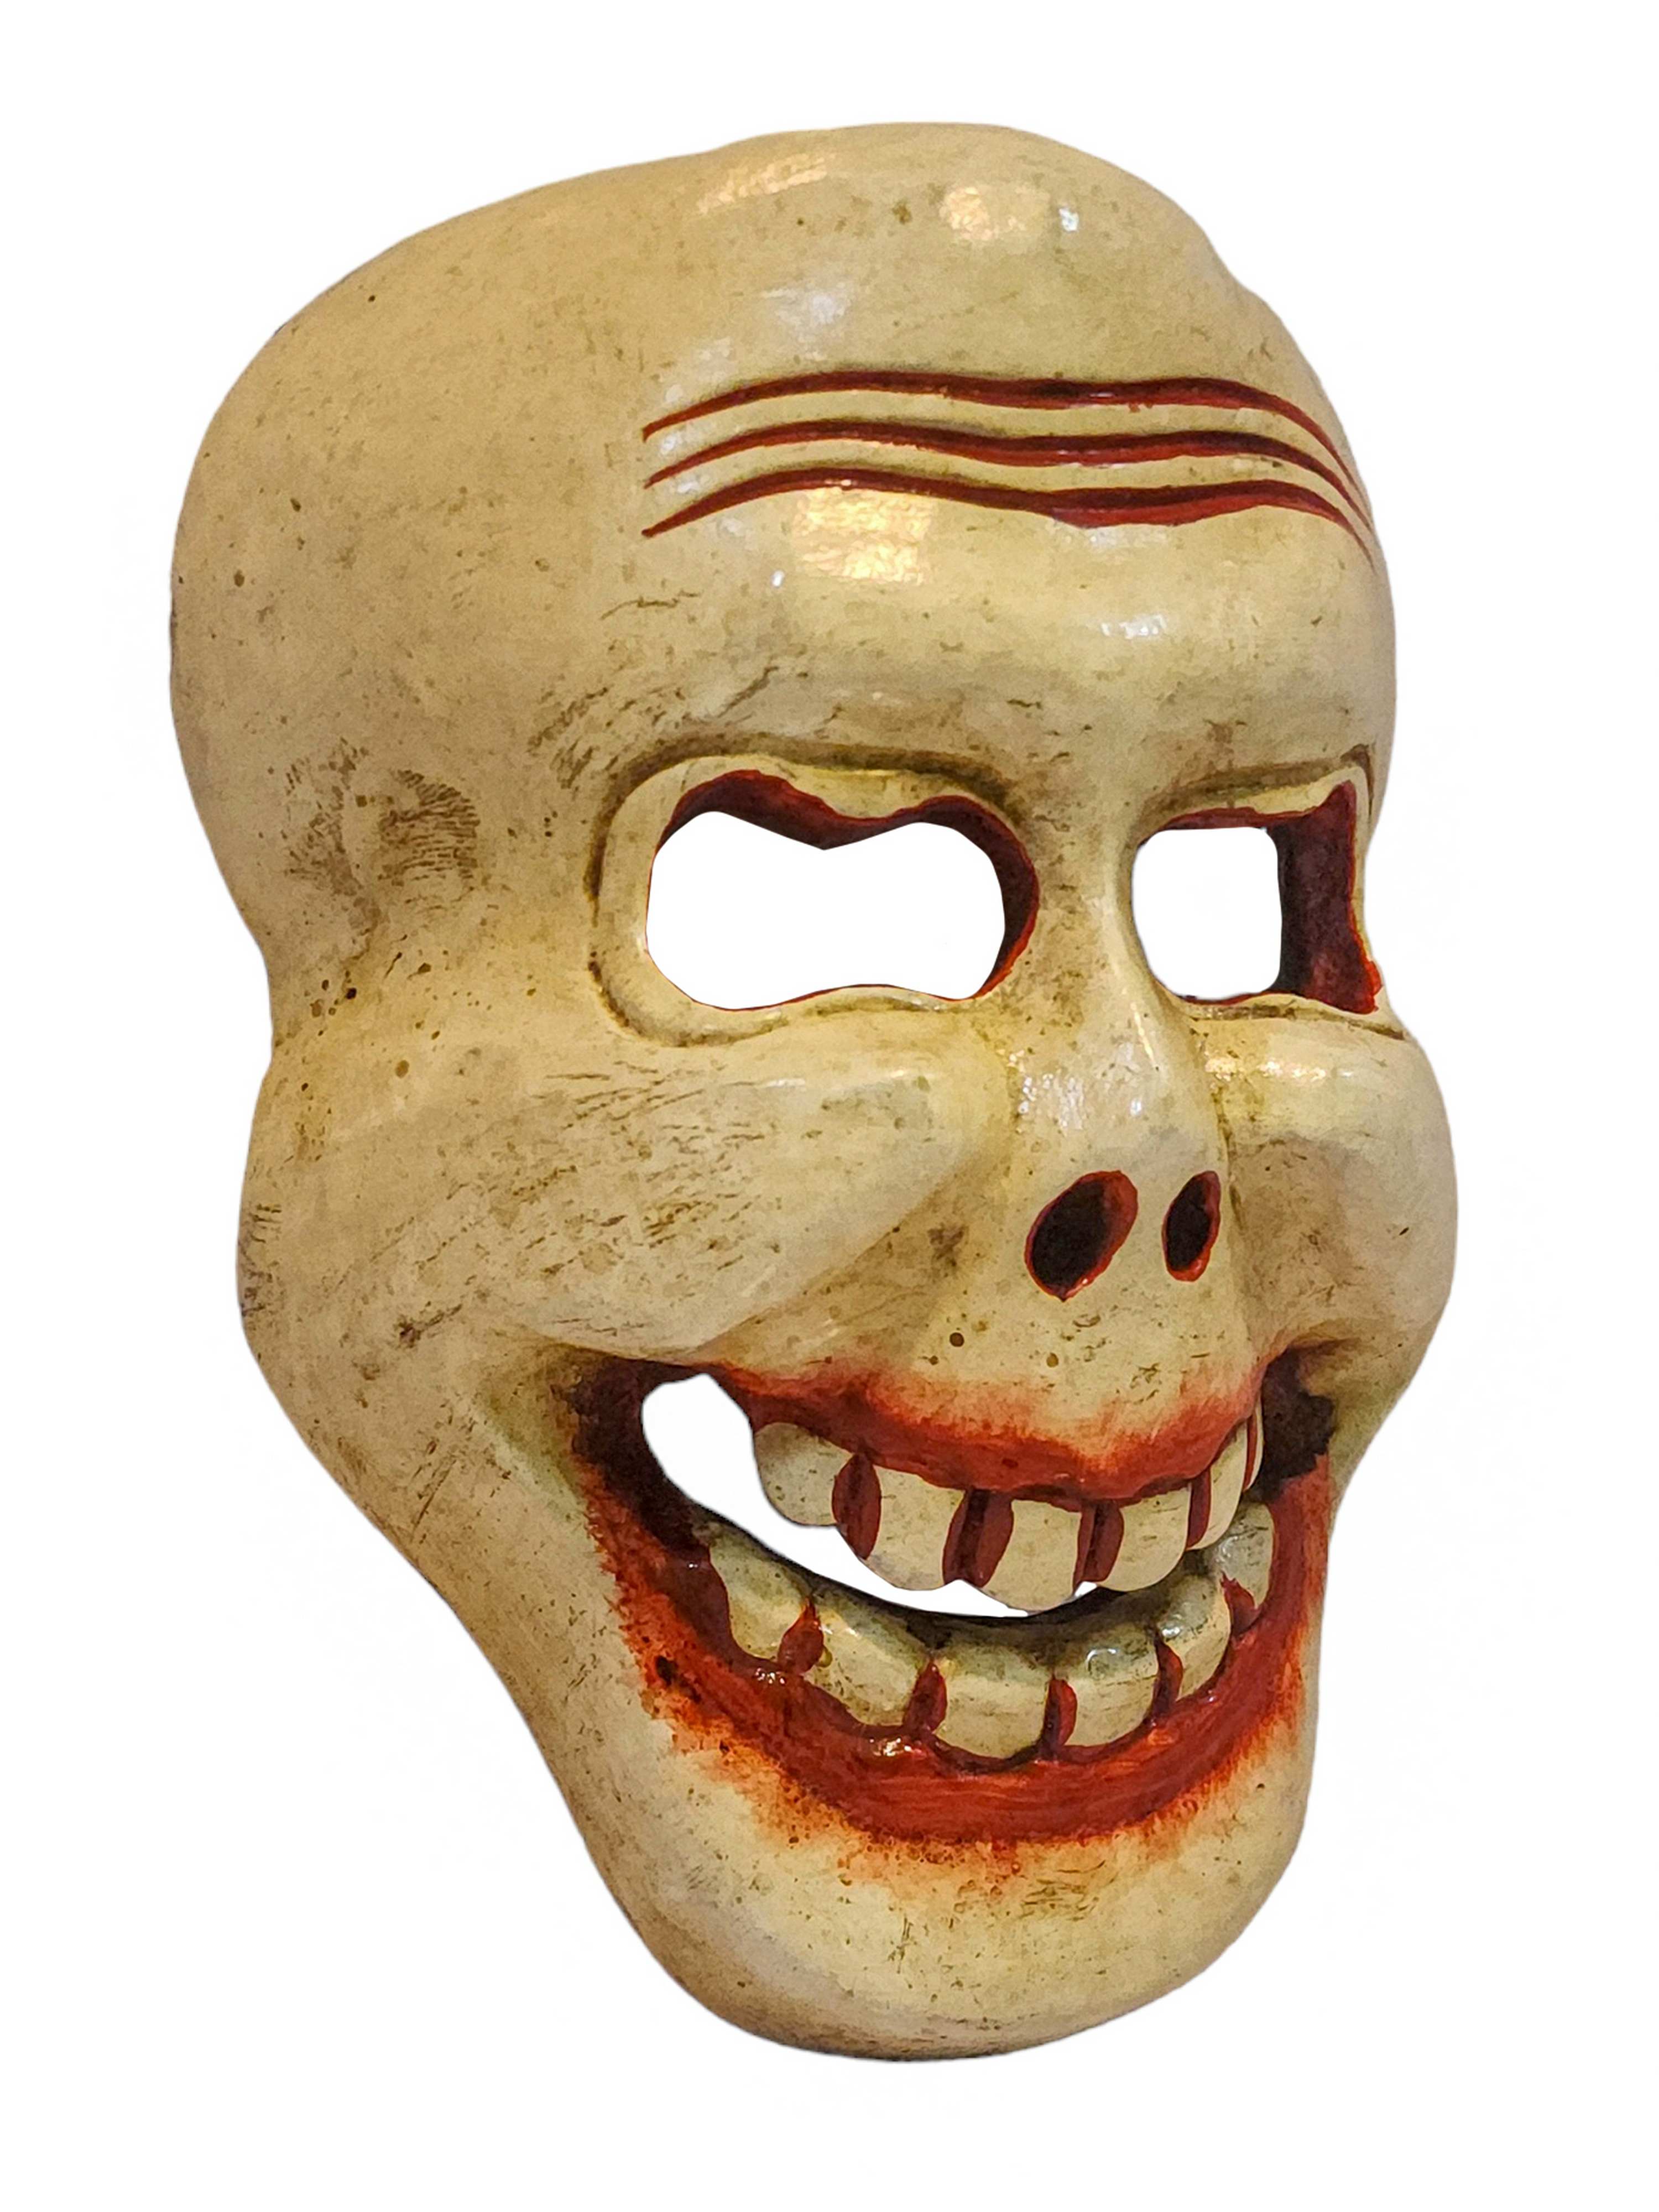 skull, Handmade Wooden Mask, Wall Hanging, painted, Poplar Wood